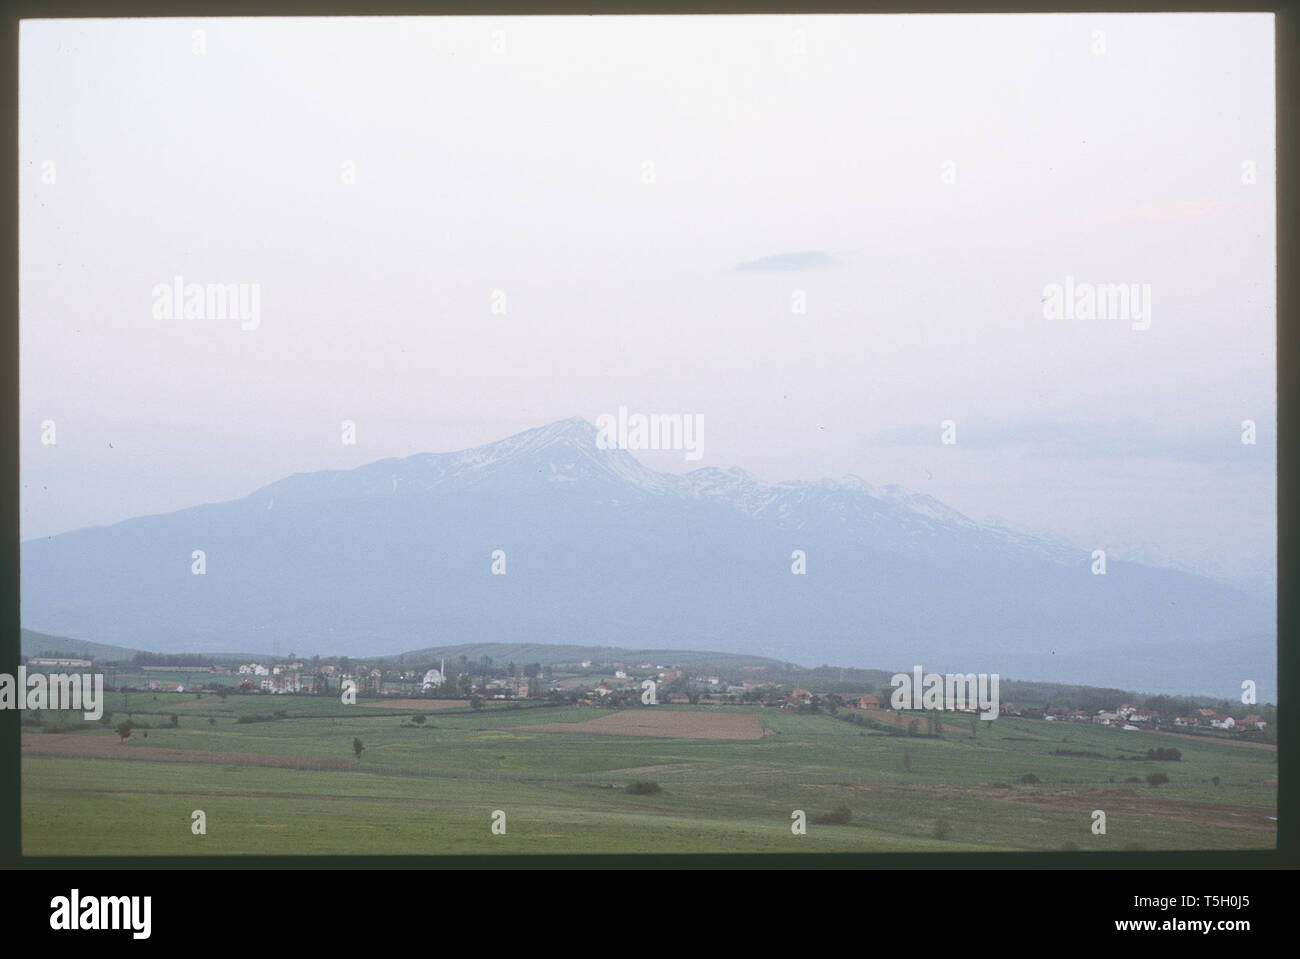 April 24, 2019 - Camp Bondsteel, Kosovo, Yugoslavia - The Saar Planinna mountains in southern Kosovo, May 3, 2002. (Credit Image: © Bill Putnam/ZUMA Wire) Stock Photo